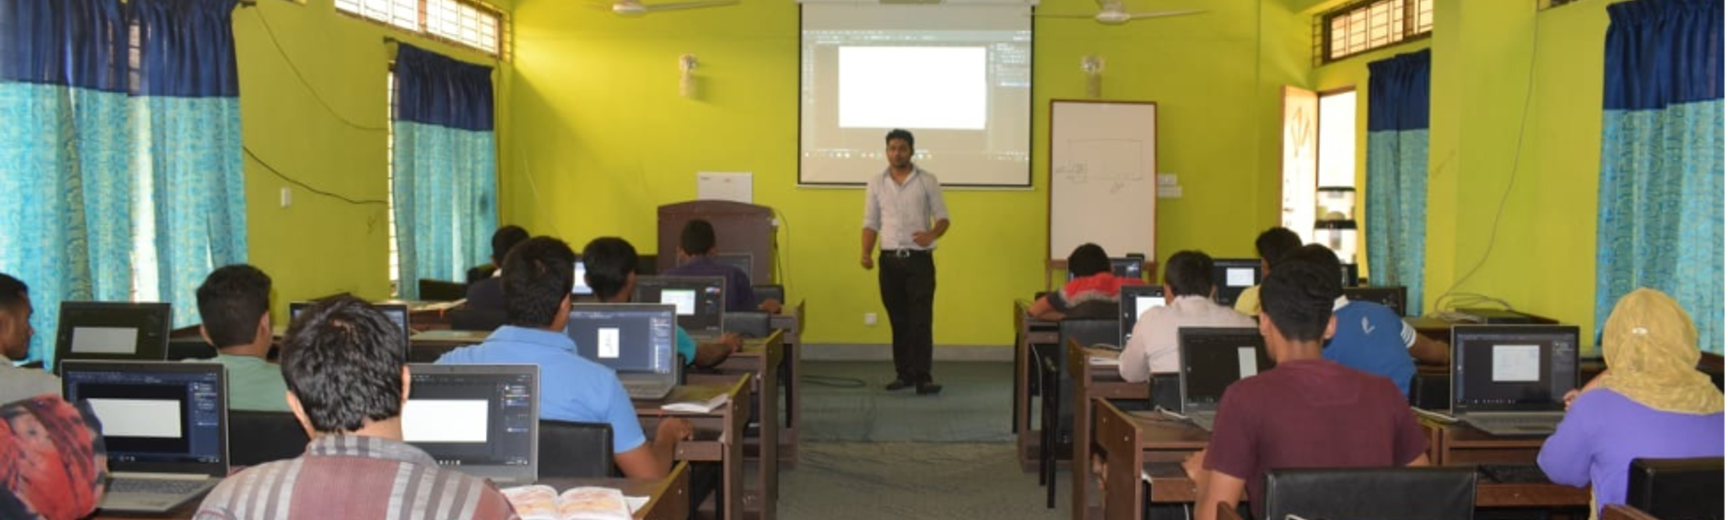 Classroom training in Bangladesh